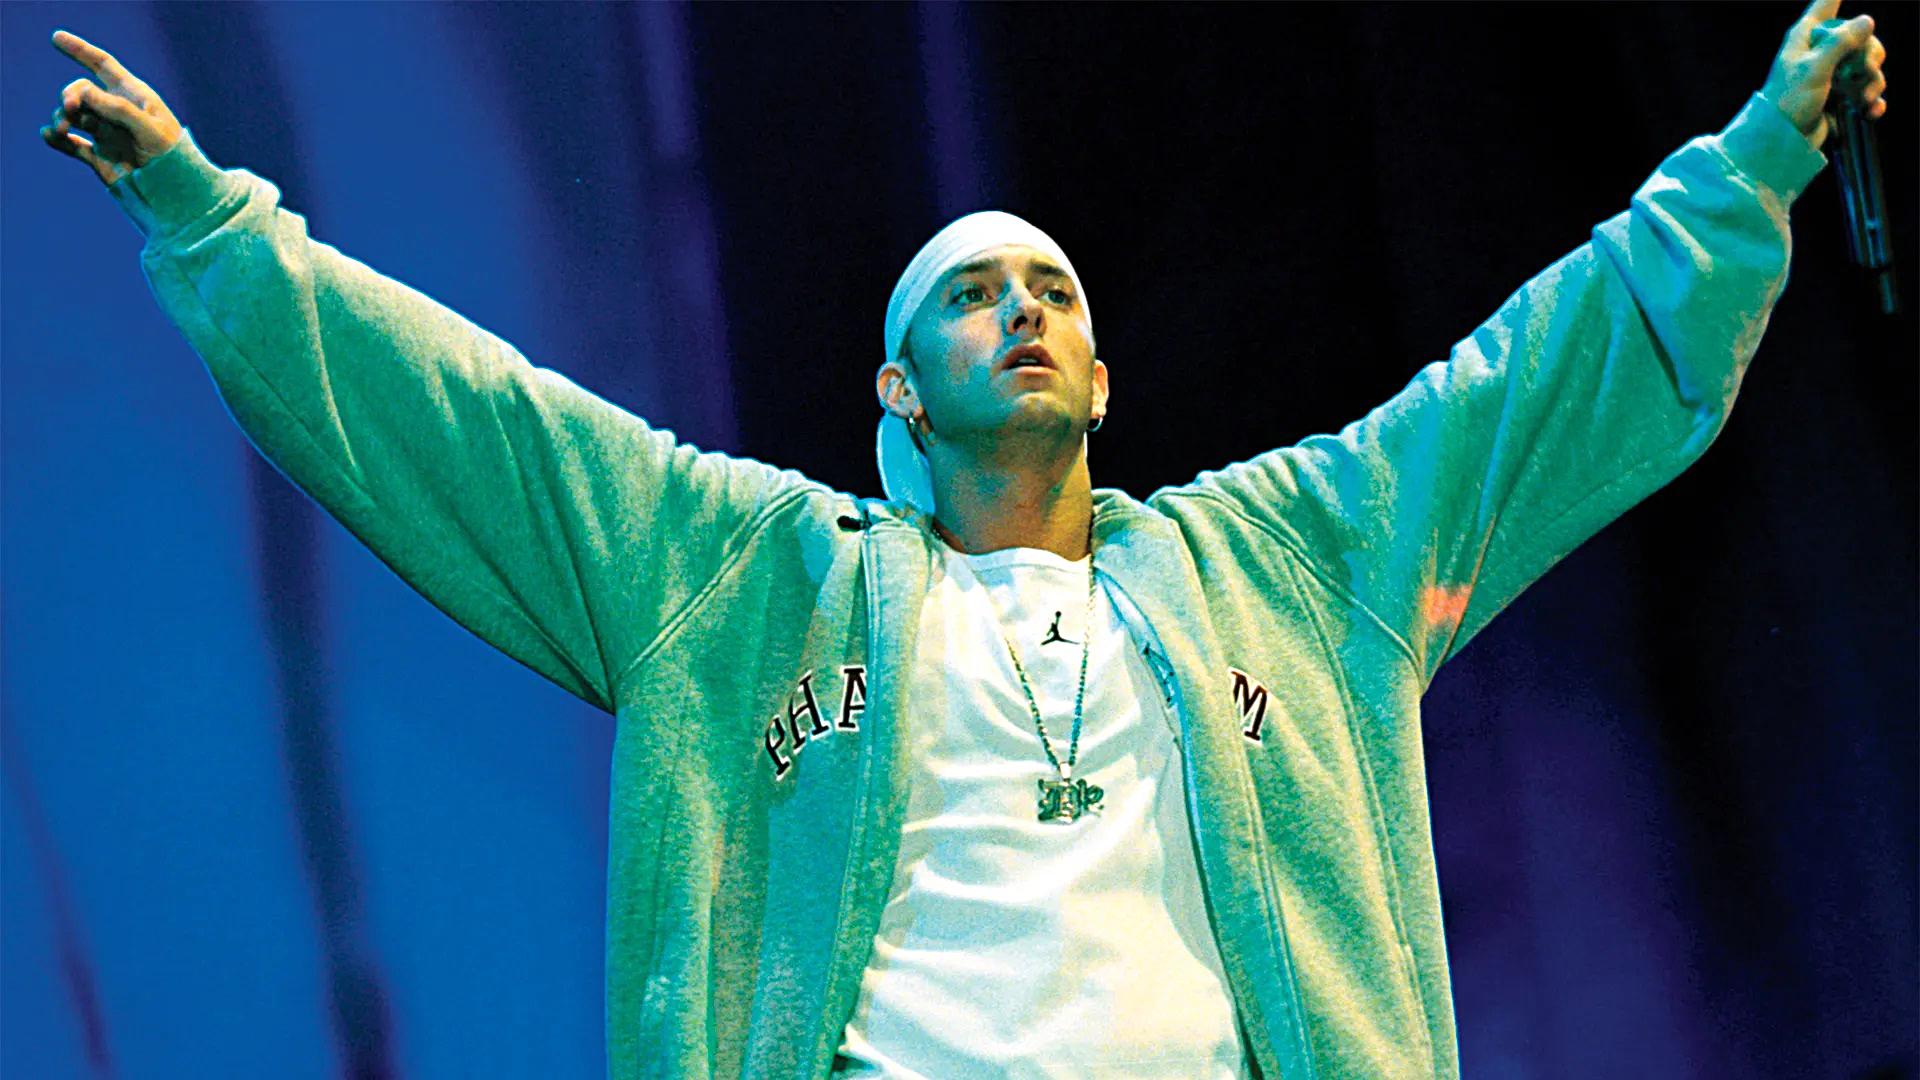 Eminem's "Lose Yourself" hits 2 BILLION streams on Spotify